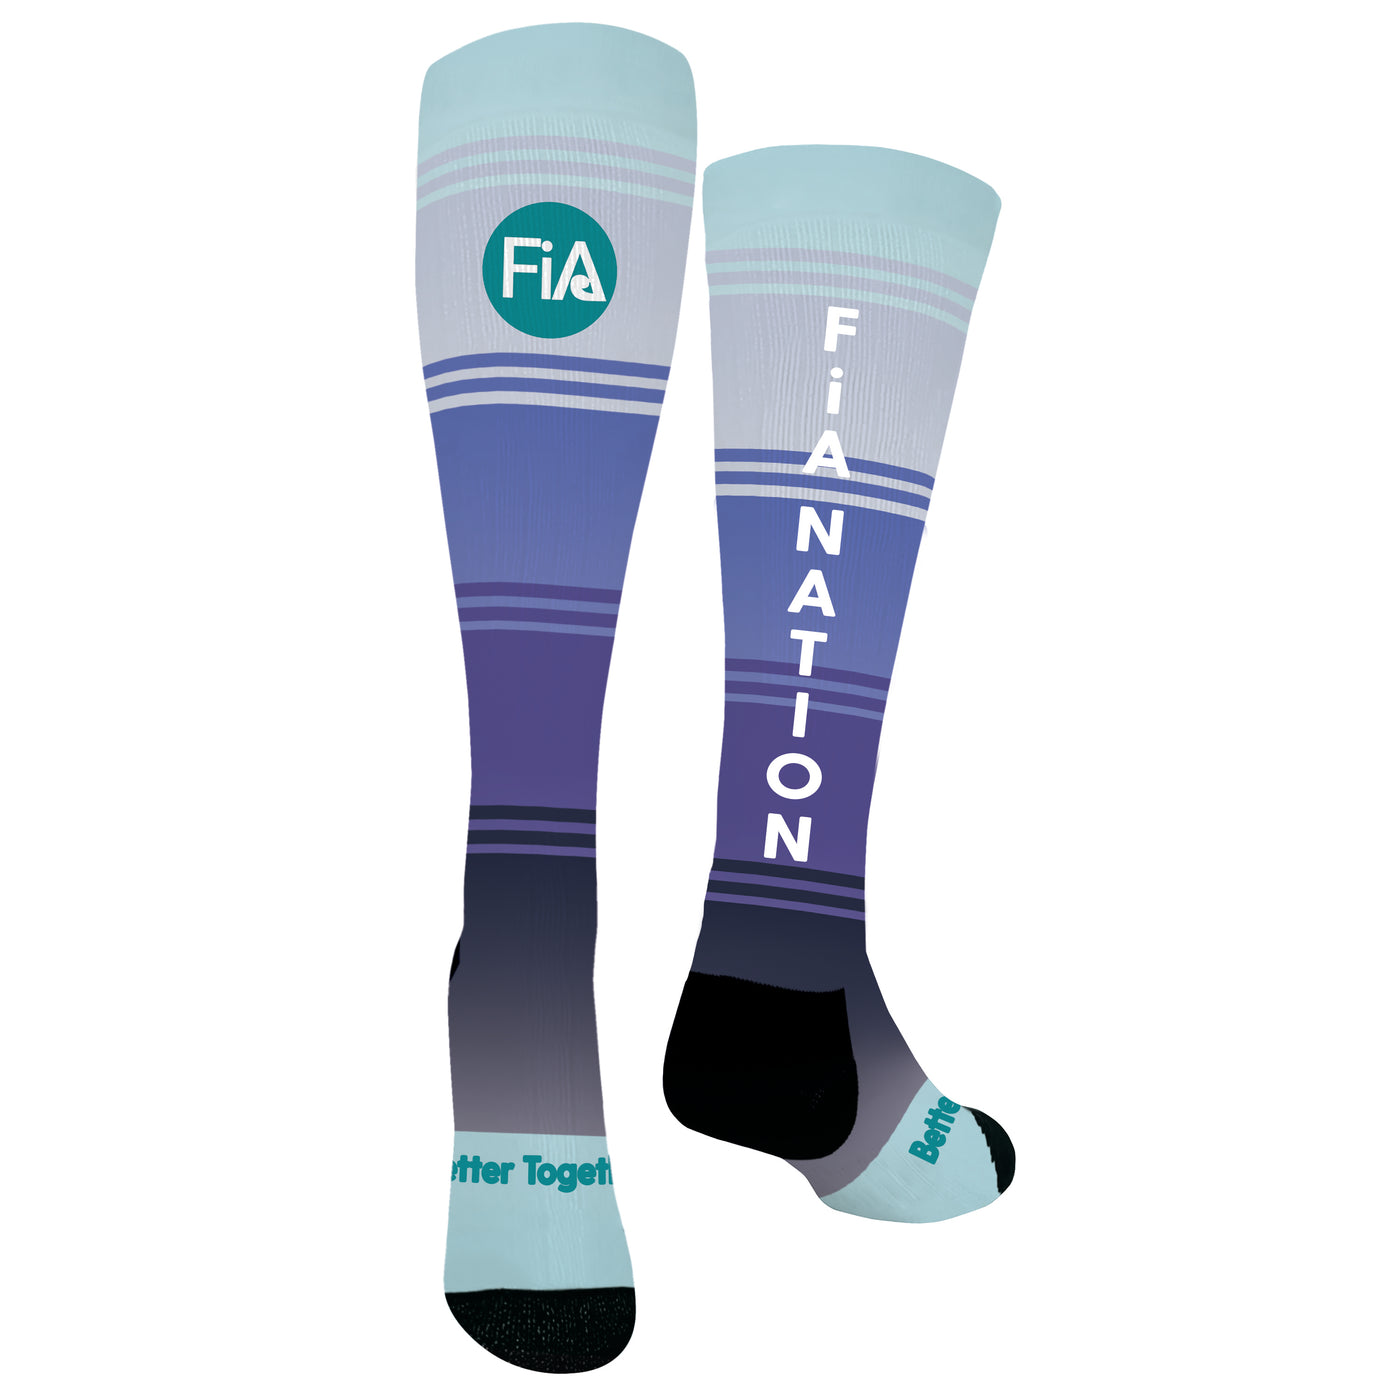 CLEARANCE ITEM - FiA 360 Tall Compression Socks - Better Together